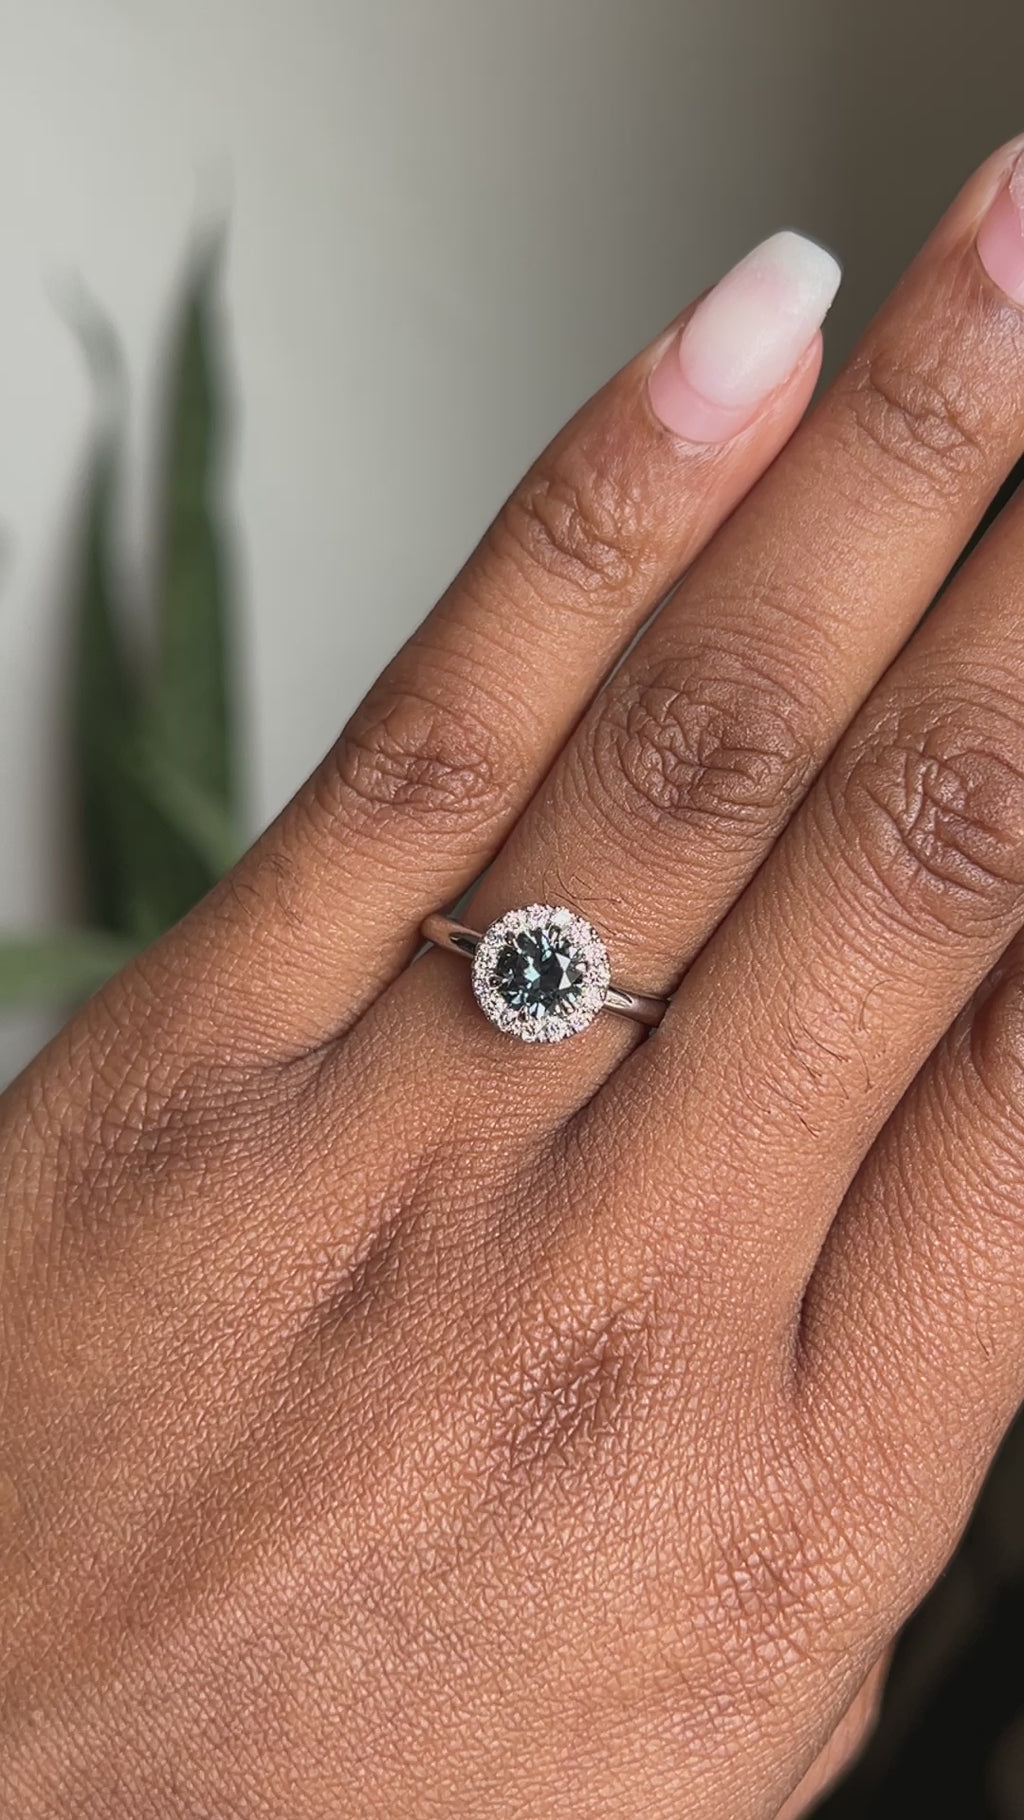 Low Profile Engagement Rings - Estate Diamond Jewelry